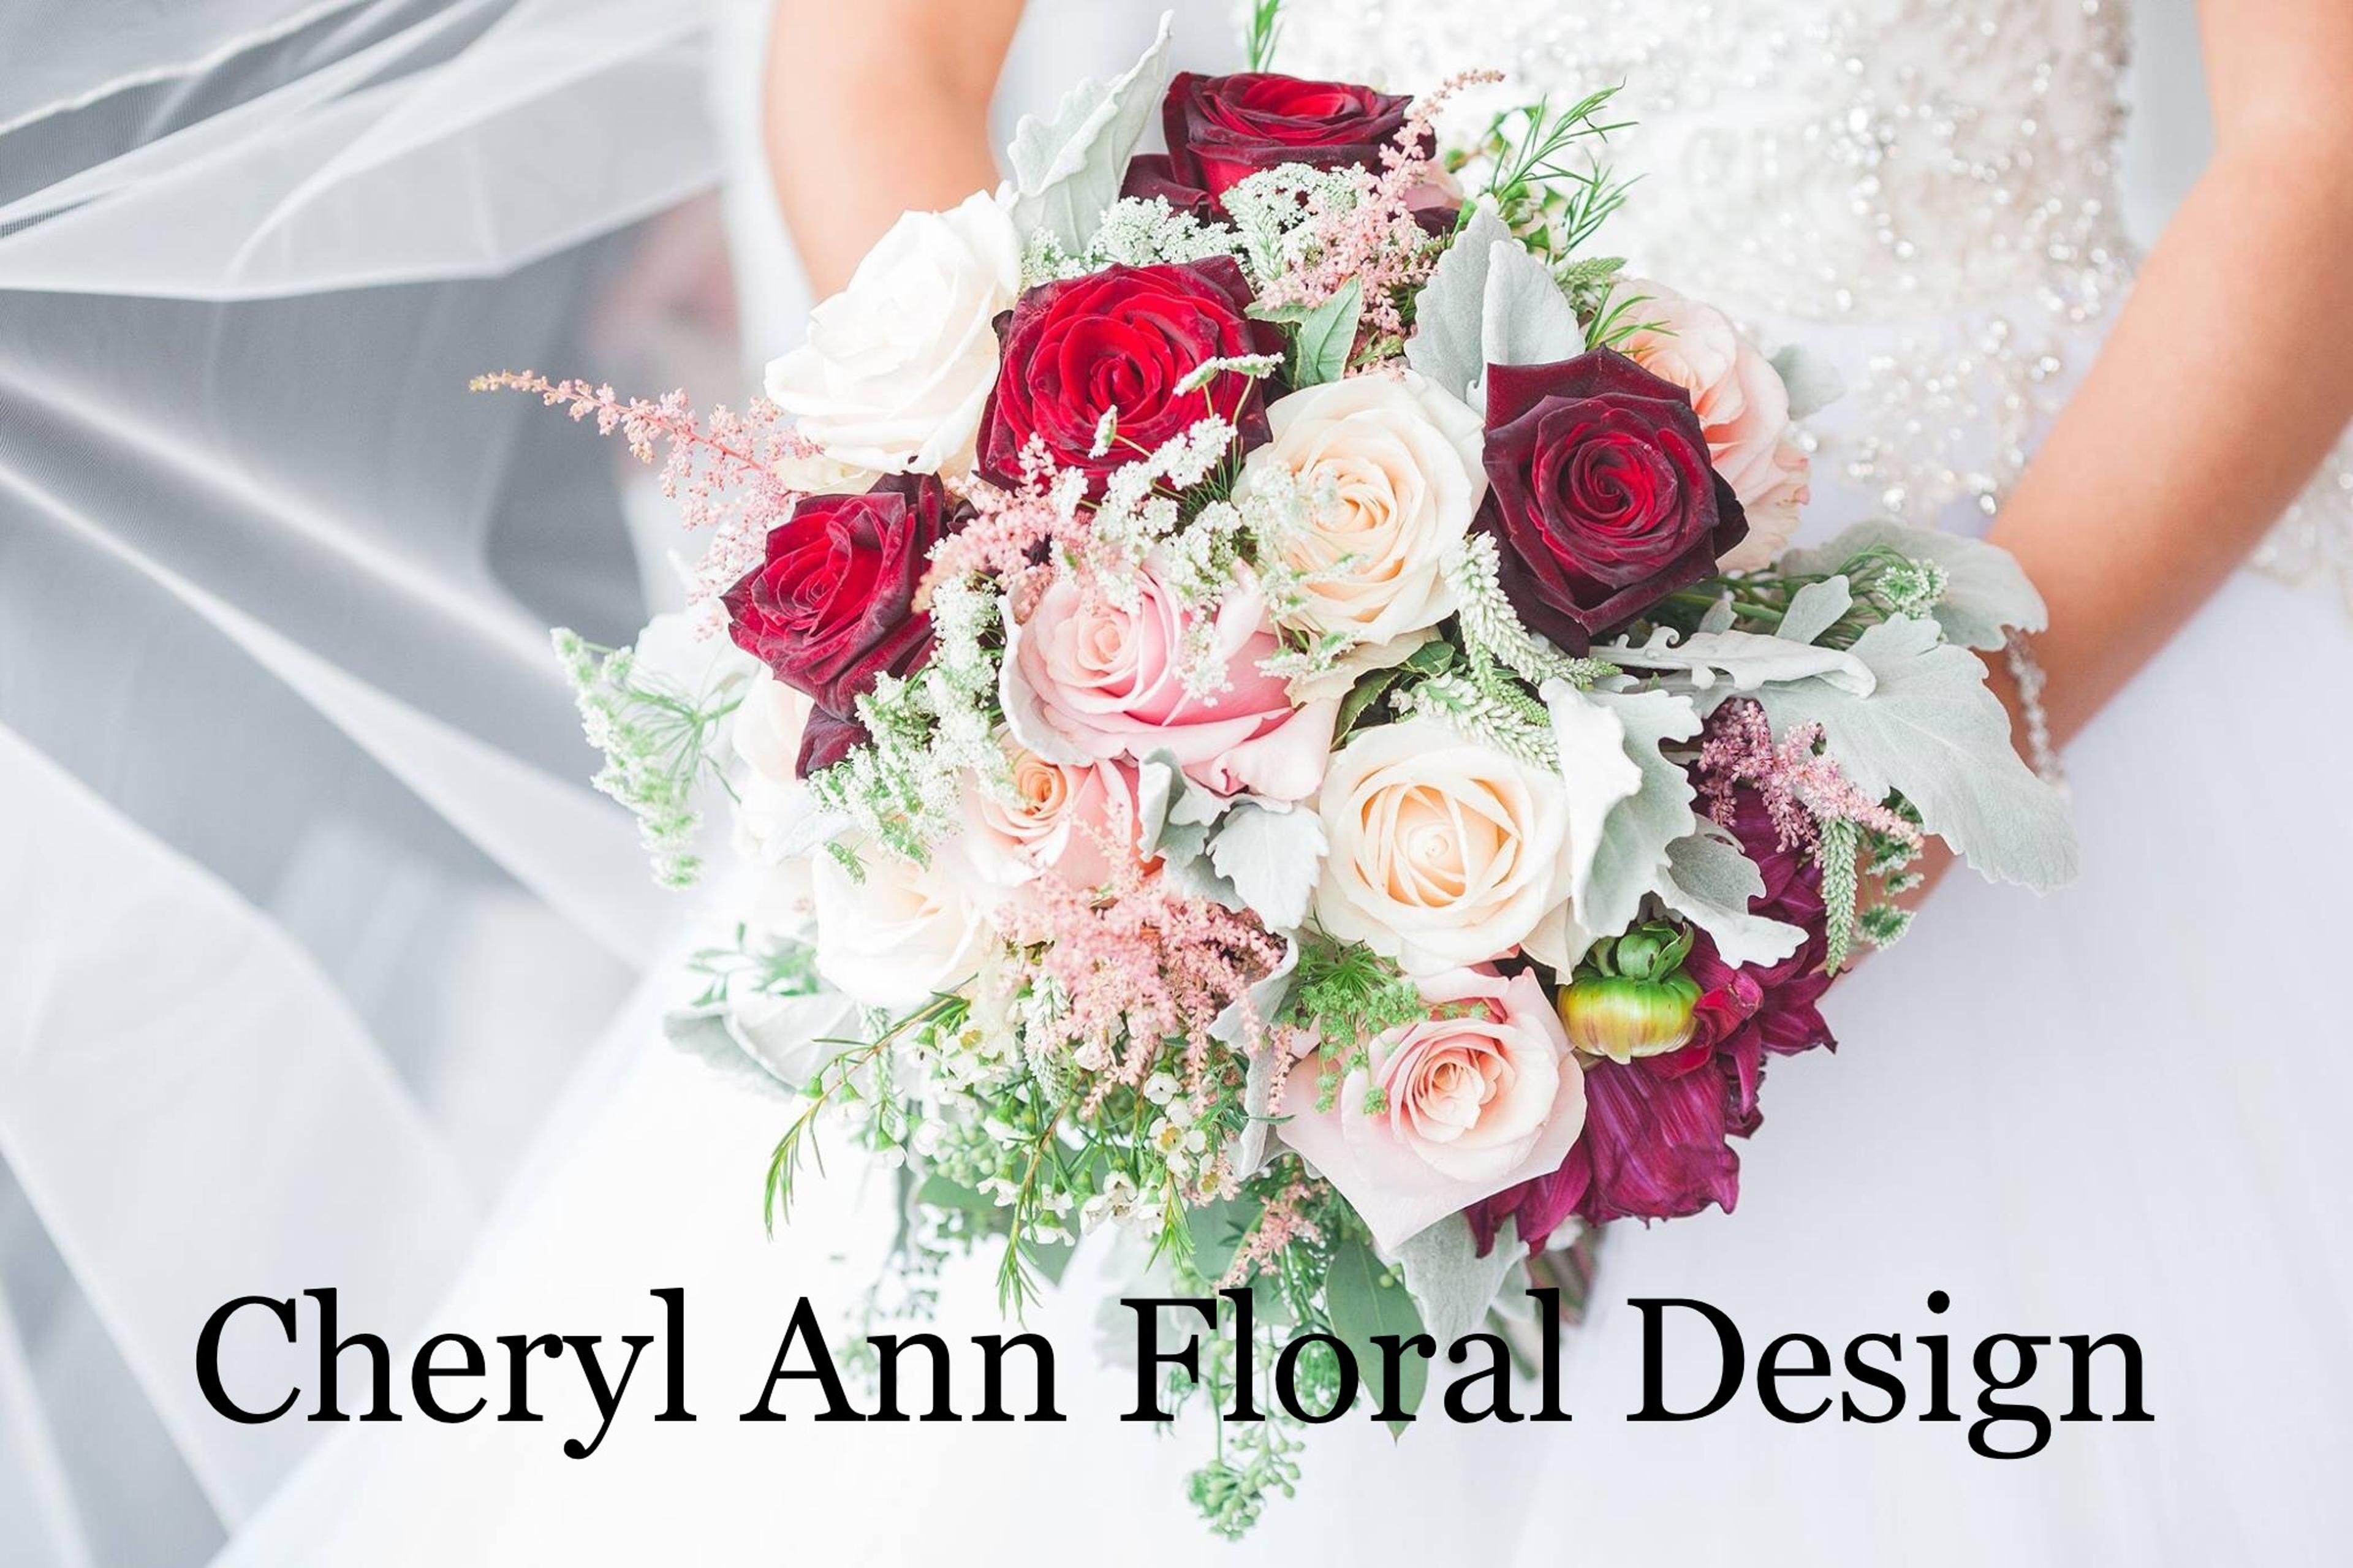 Cheryl Ann Floral Design